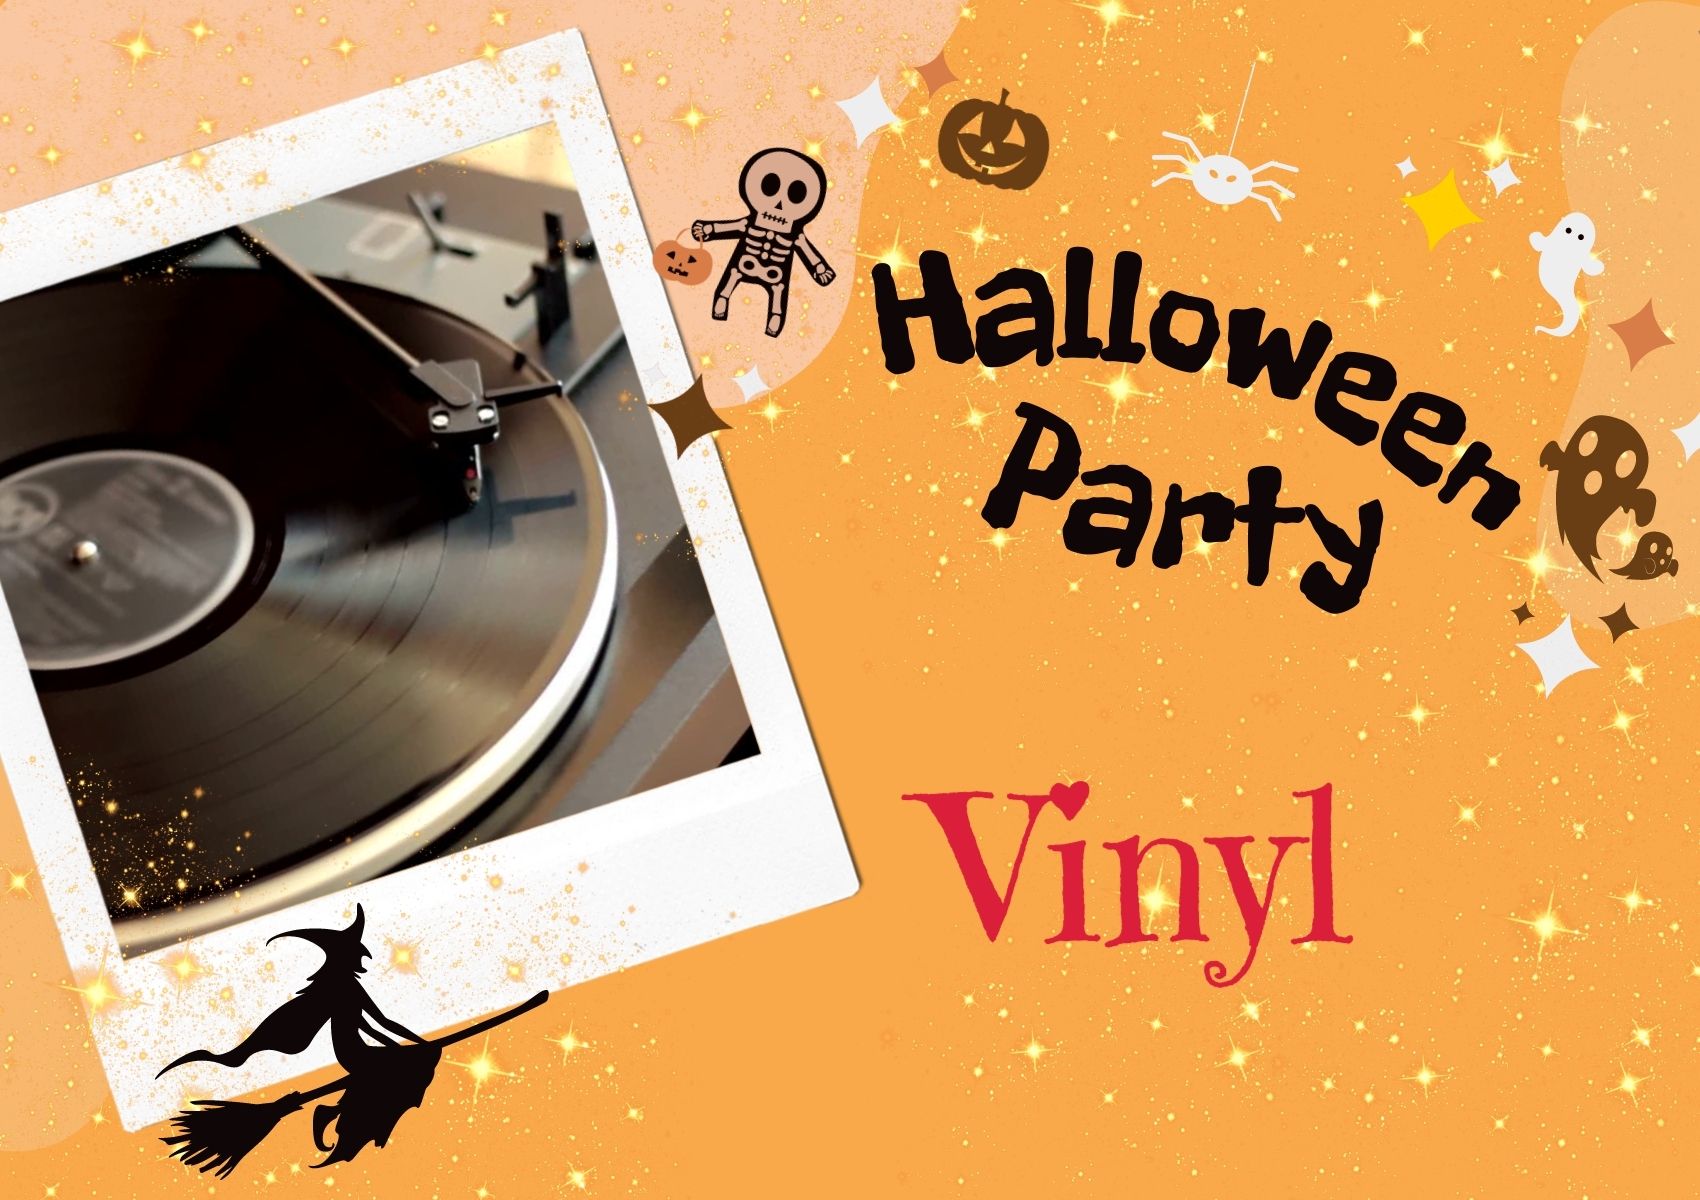 ”Vinyl” Halloween Party